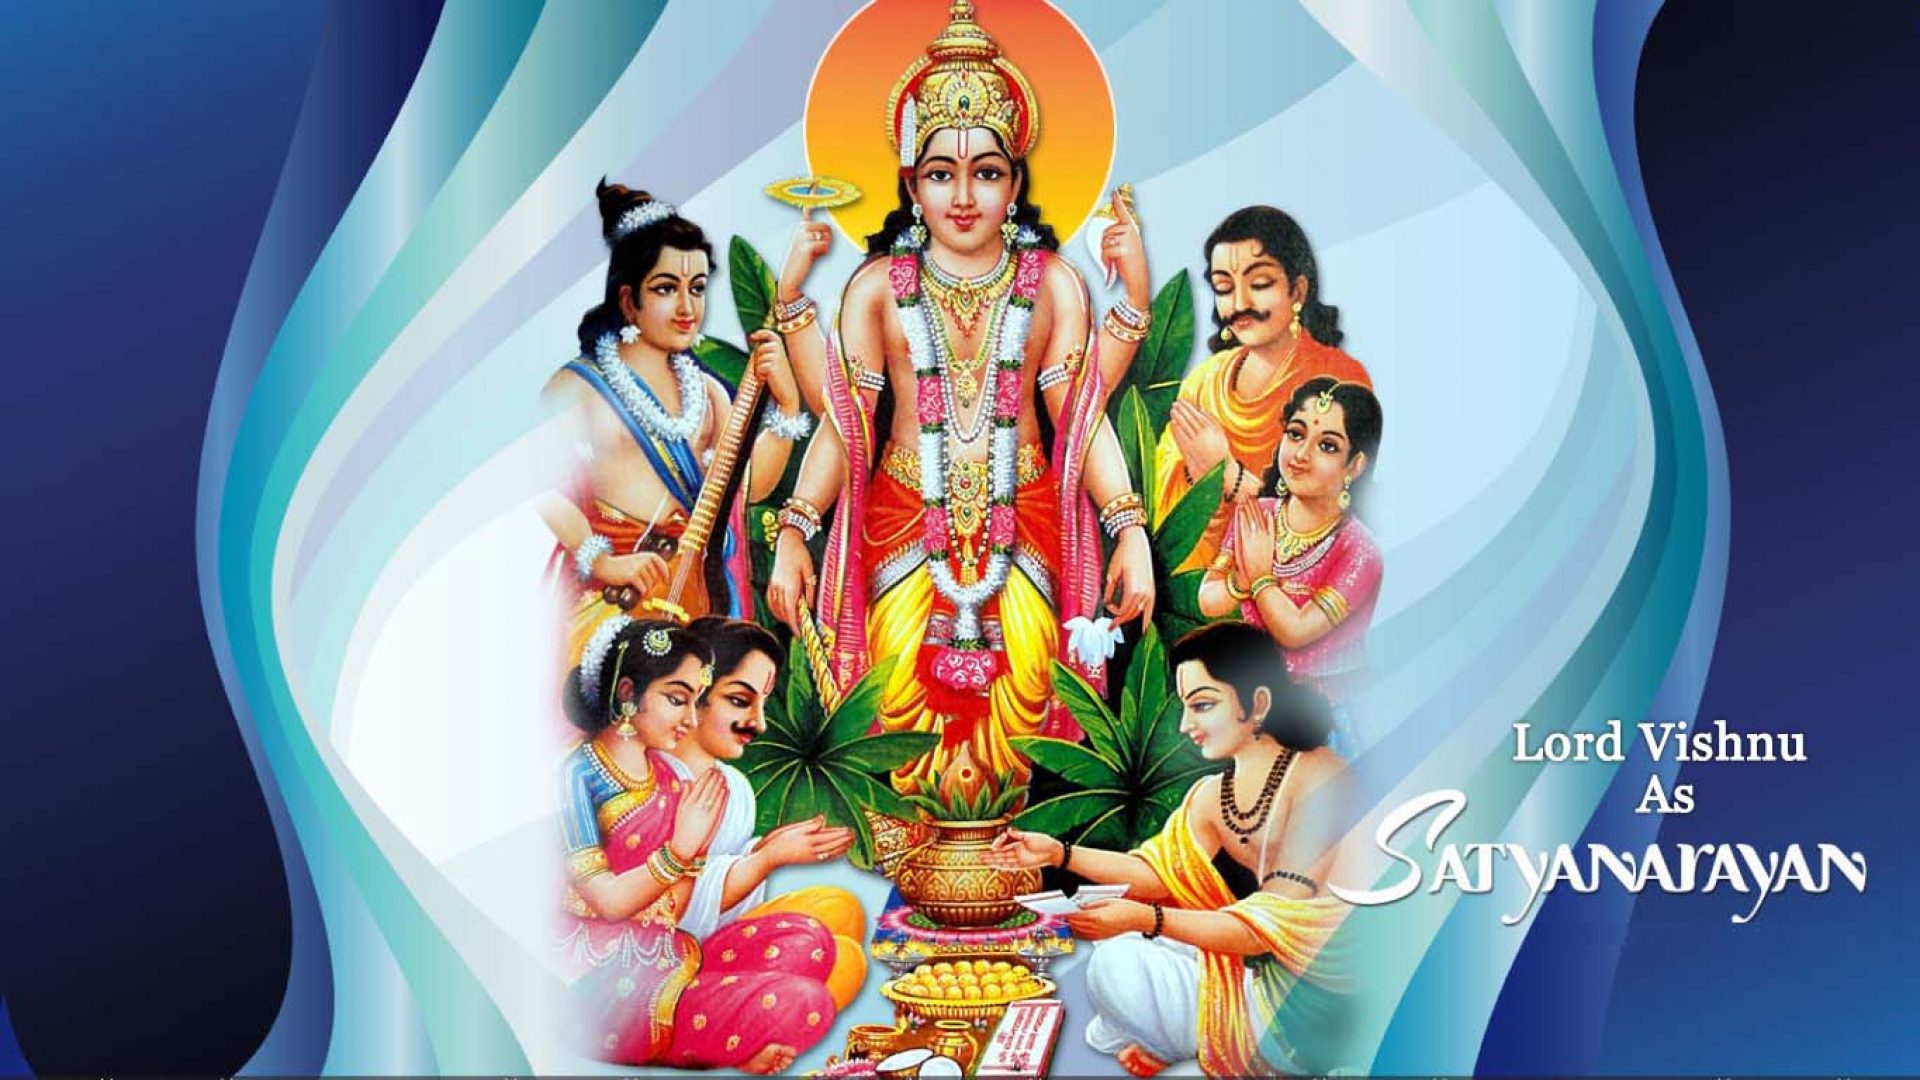 Lord Vishnu Satyanarayan Bhagwan Hd Images | Hindu Gods and Goddesses